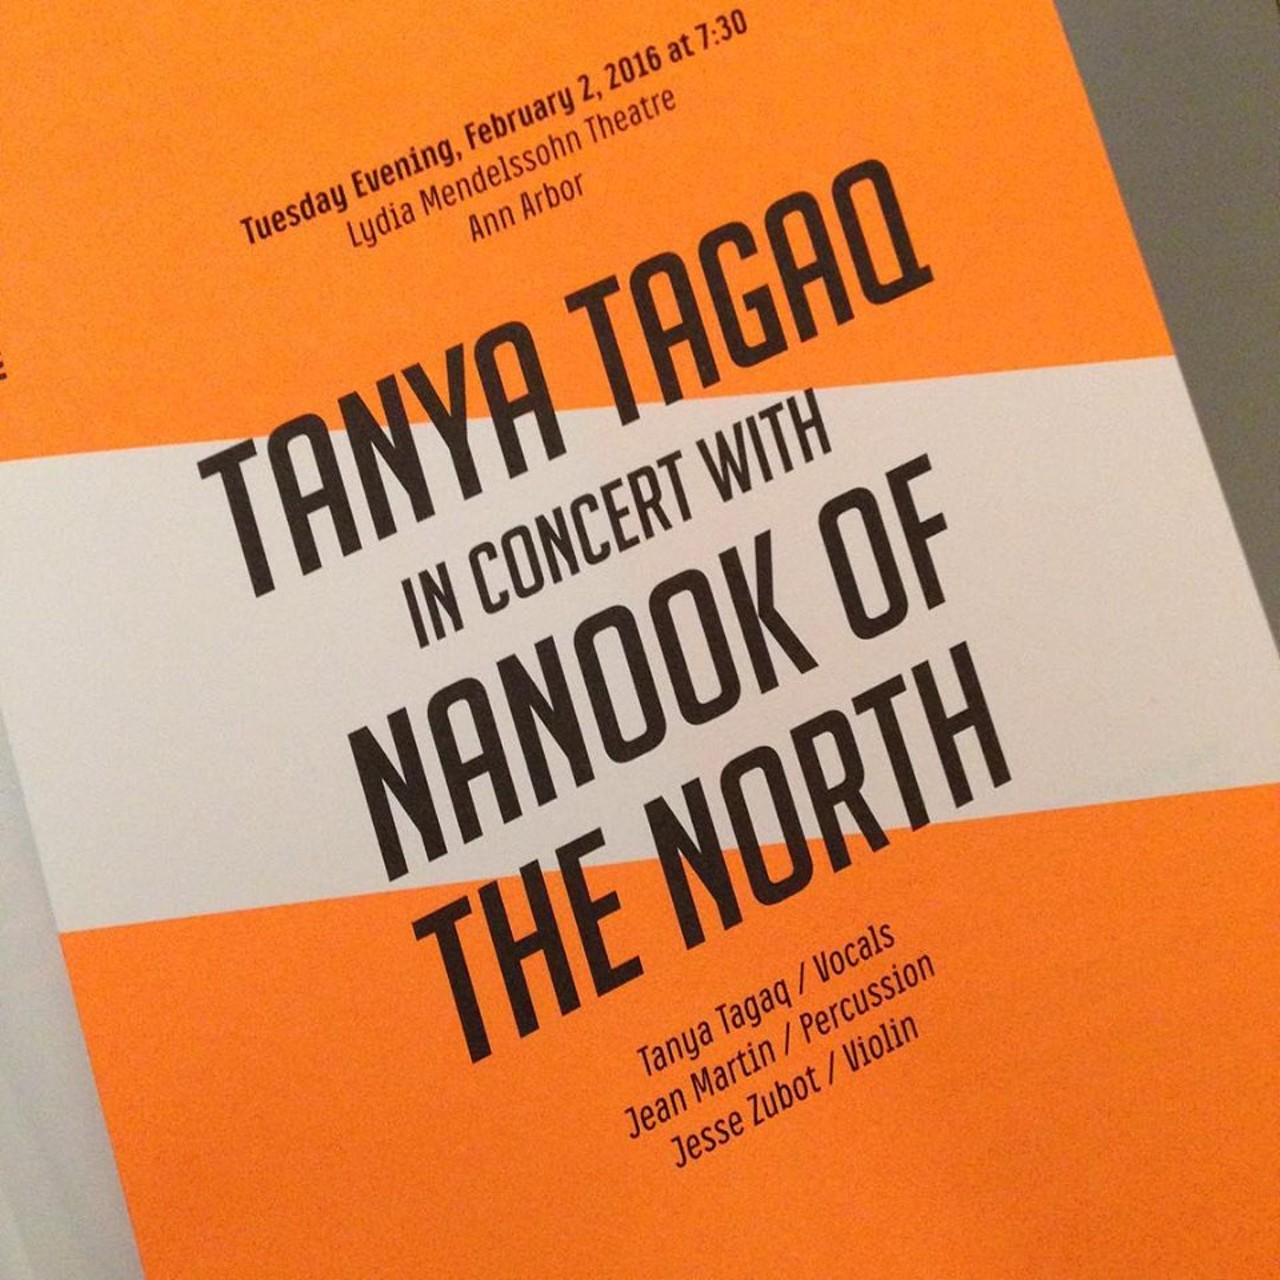 UMS Concert Series: Tanya Tagaq with Nanook of the North